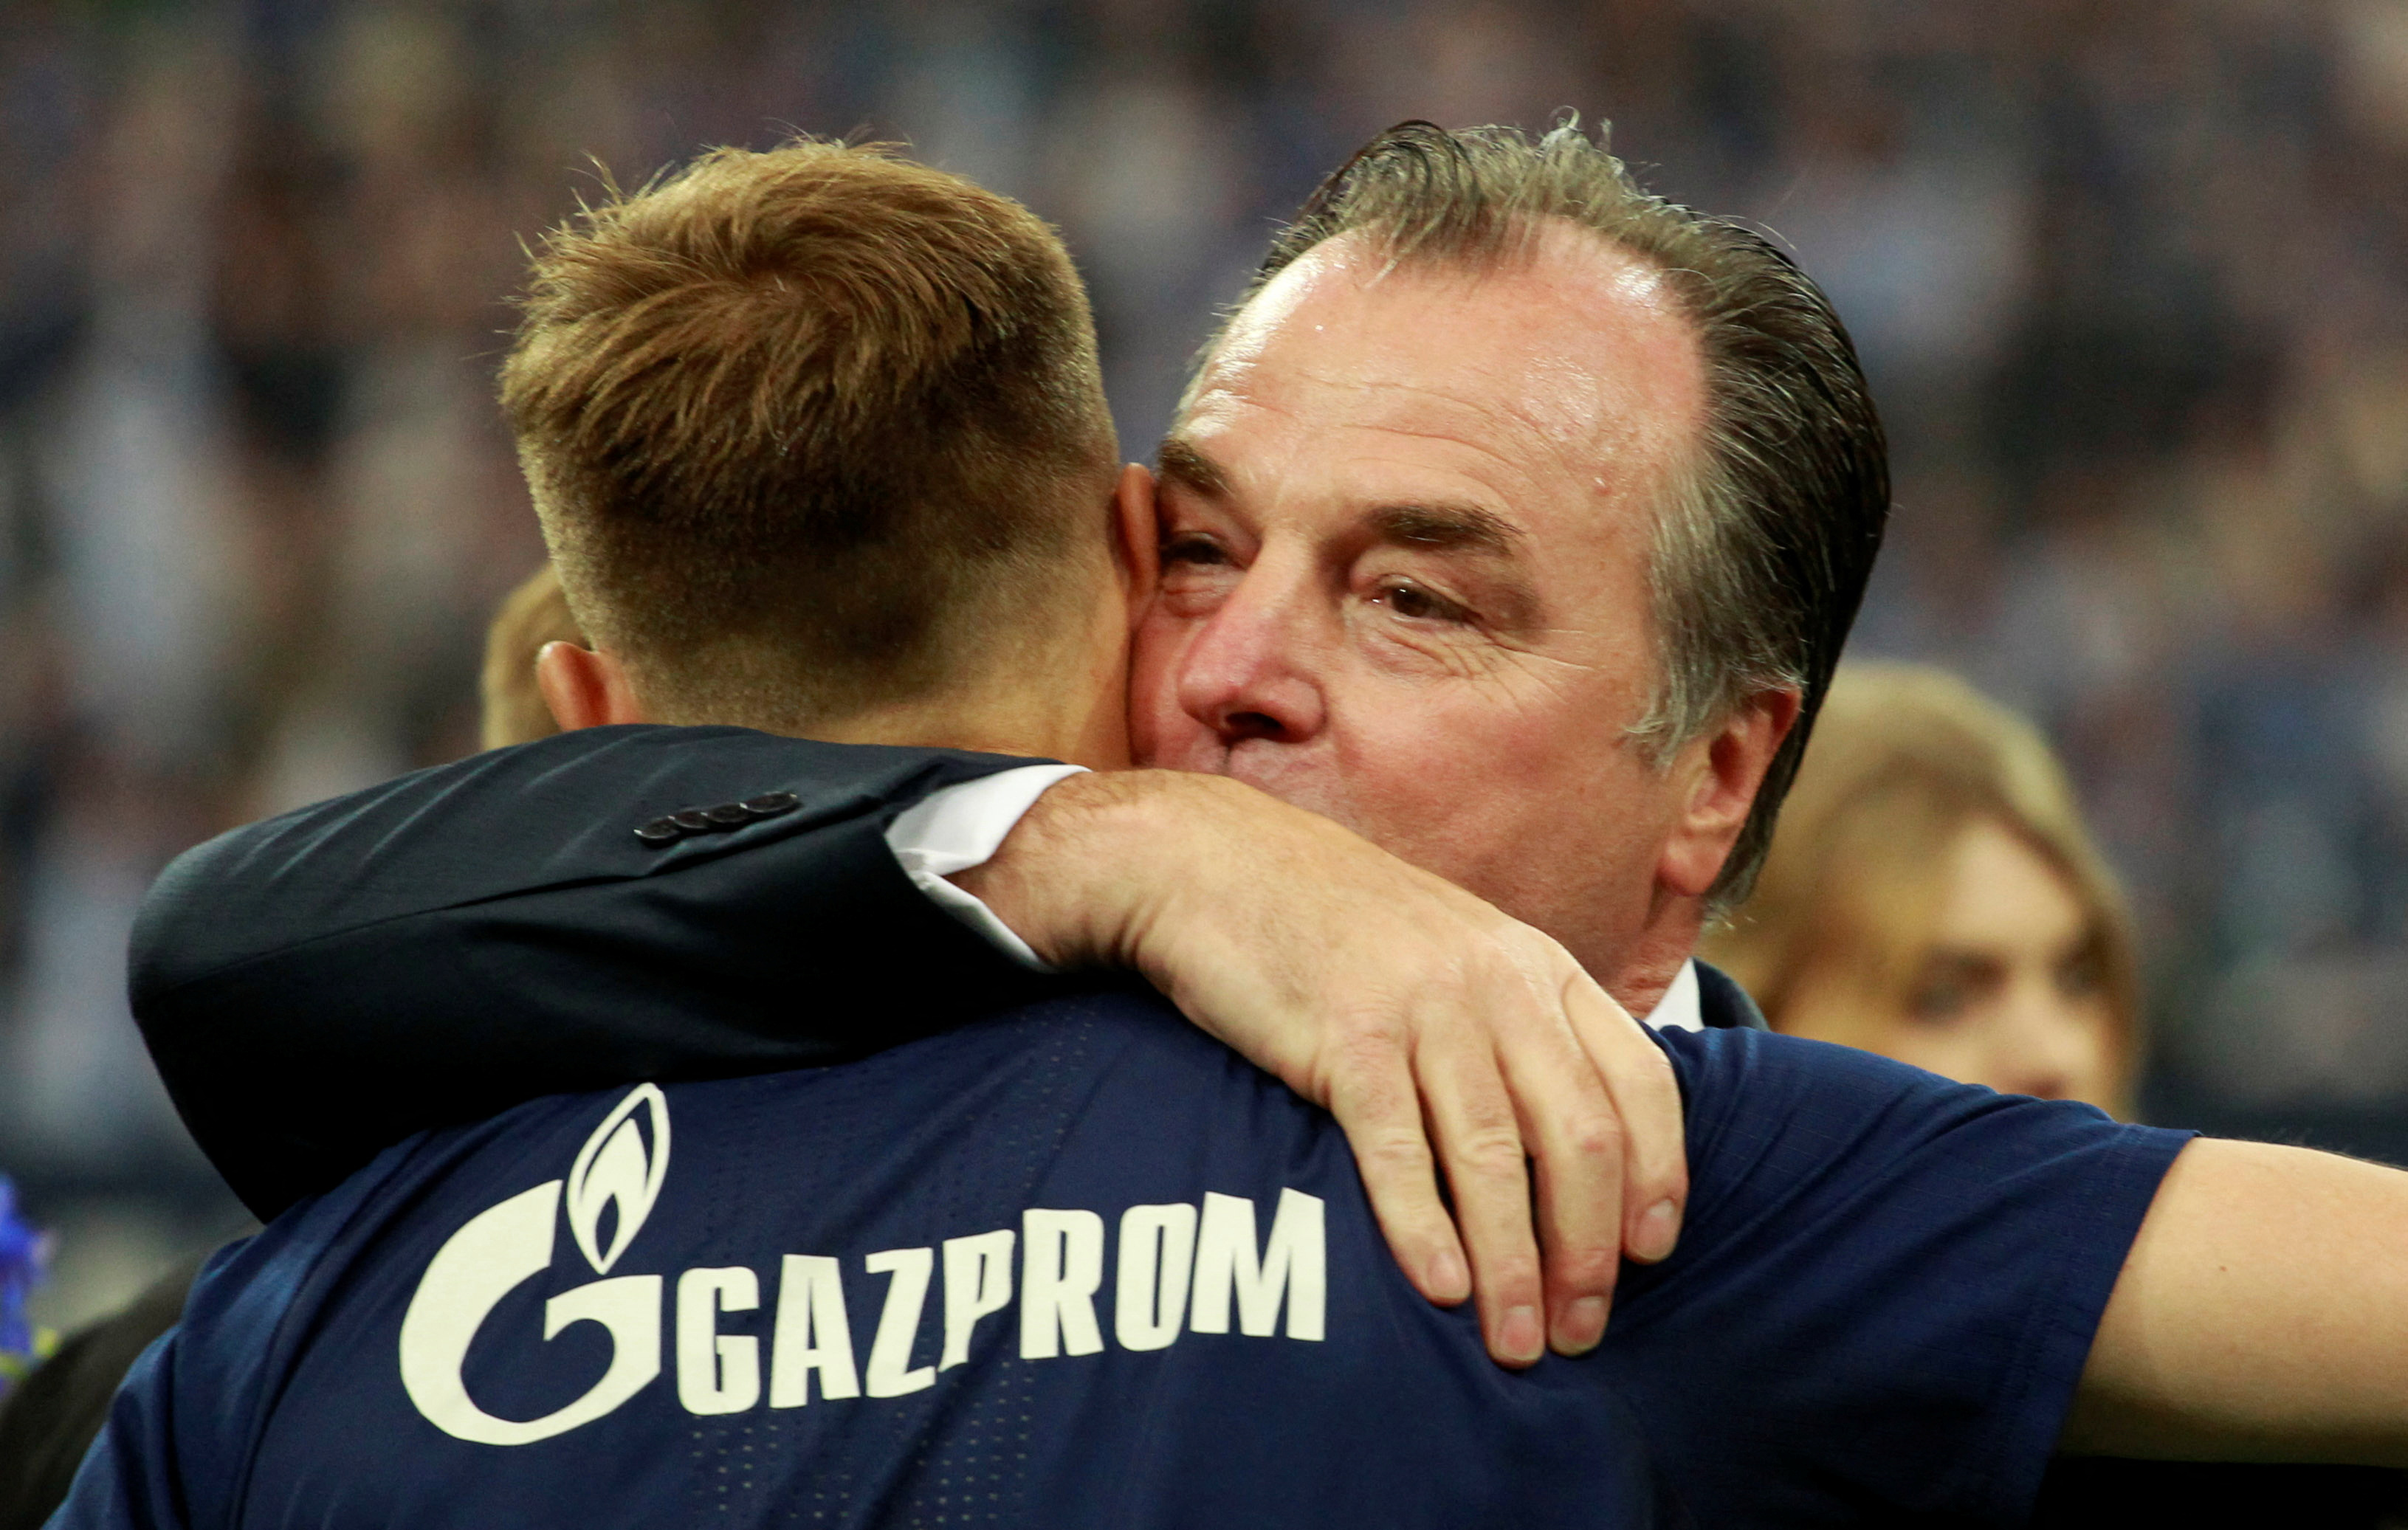 Schalke chairman Clemens Tonnies hugs Holger Badstuber before the match